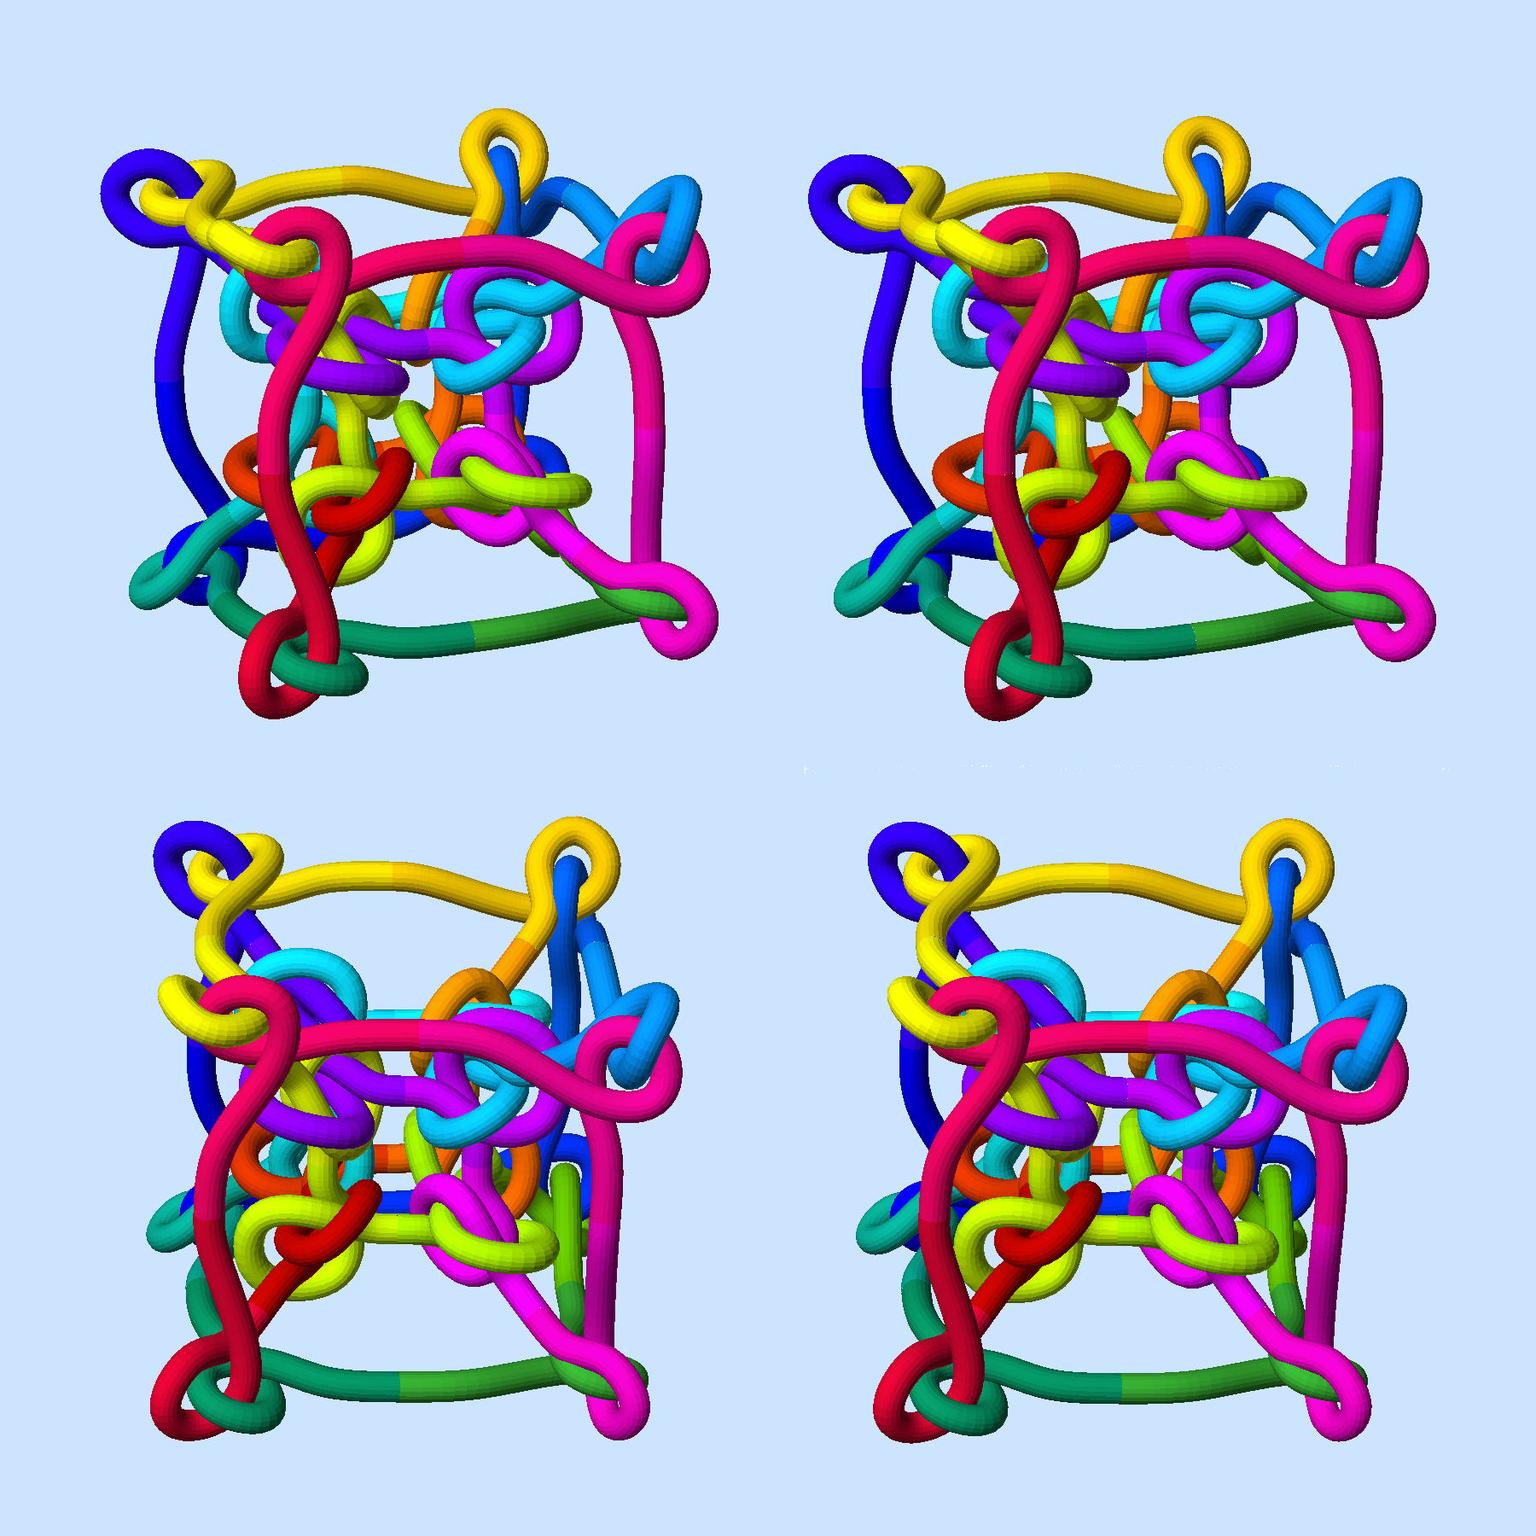 Image for entry 'Hypercube Knot'